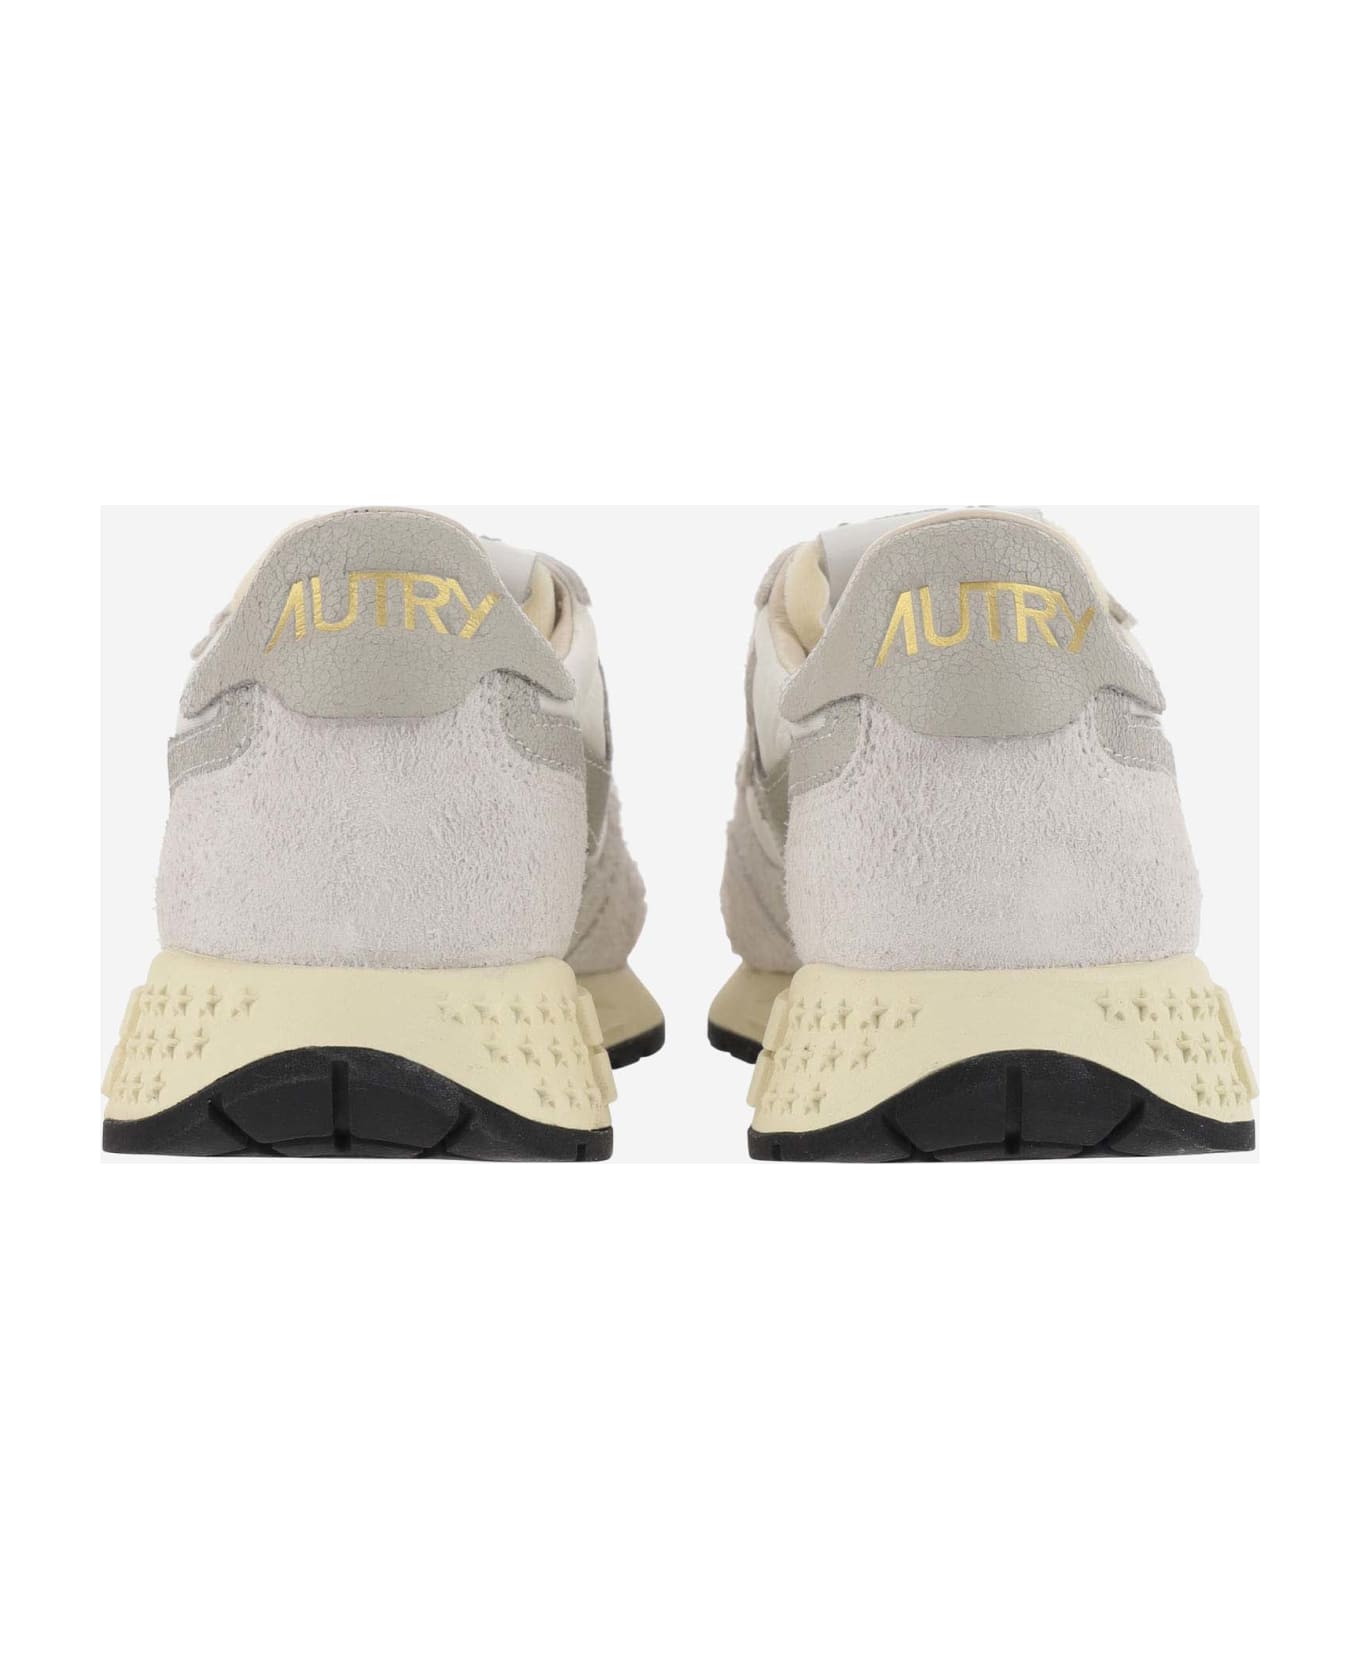 Autry Reelwind Sneakers - Bianco/Nero